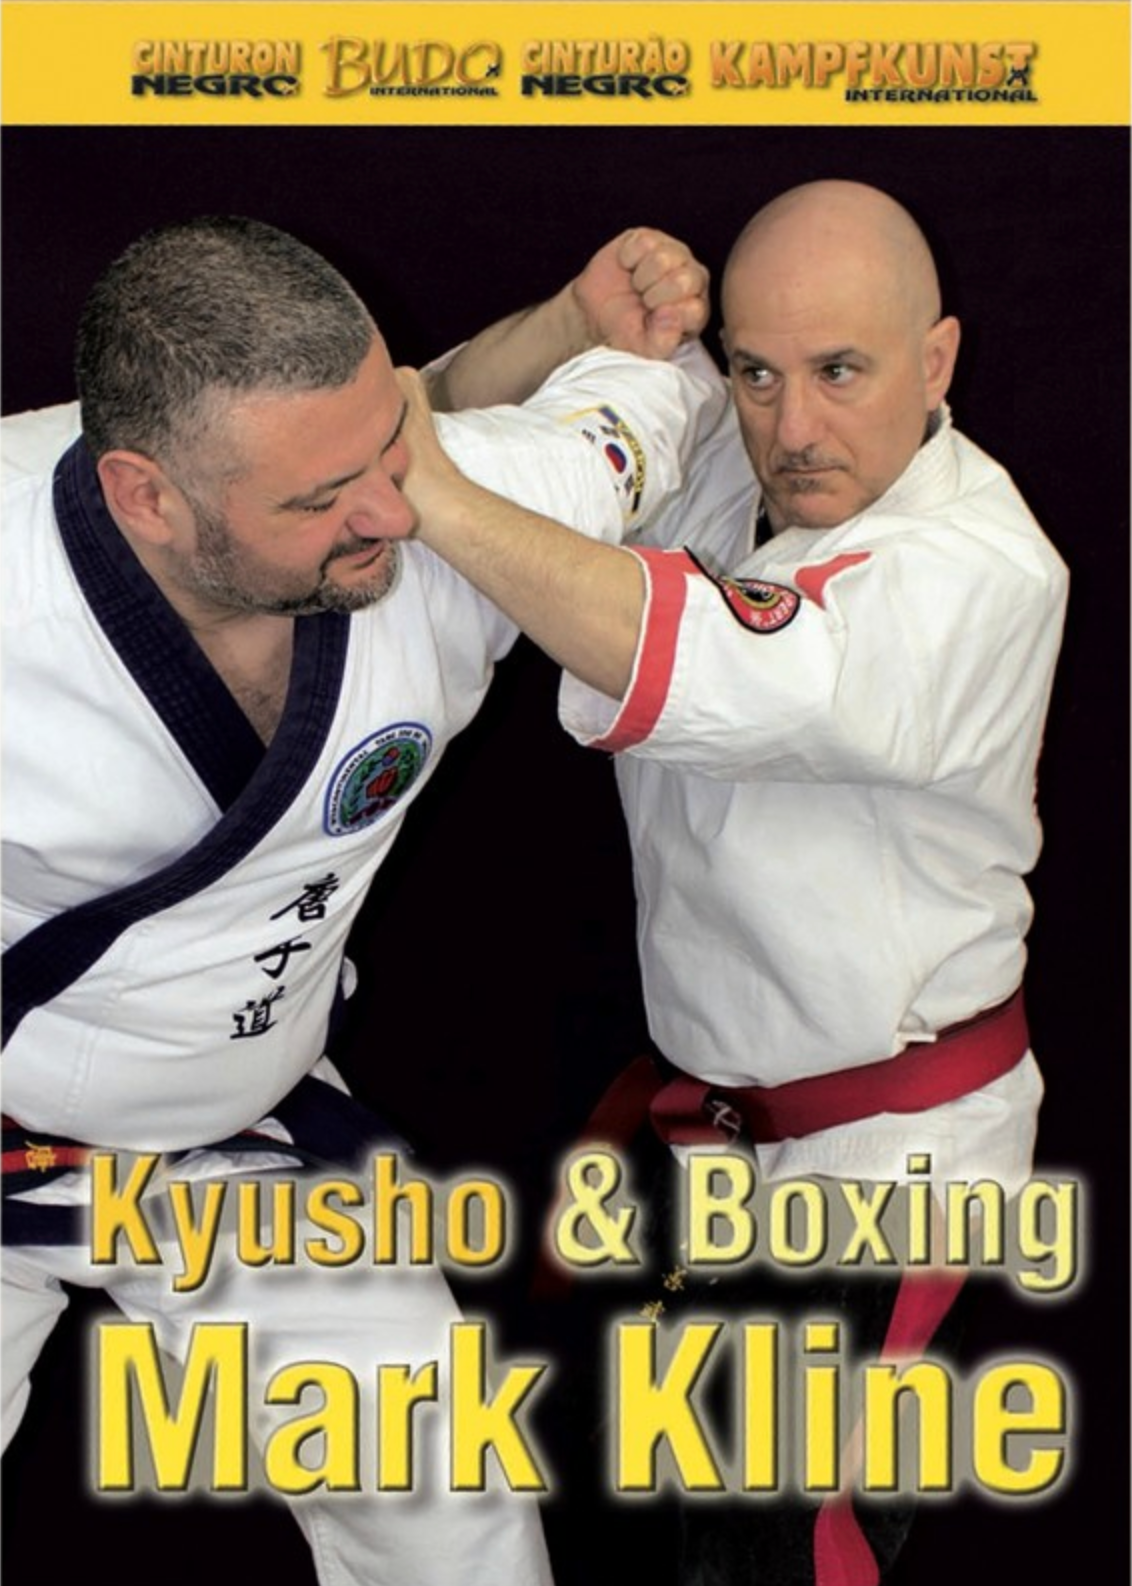 Kyusho & Boxing DVD with Mark Kline - Budovideos Inc